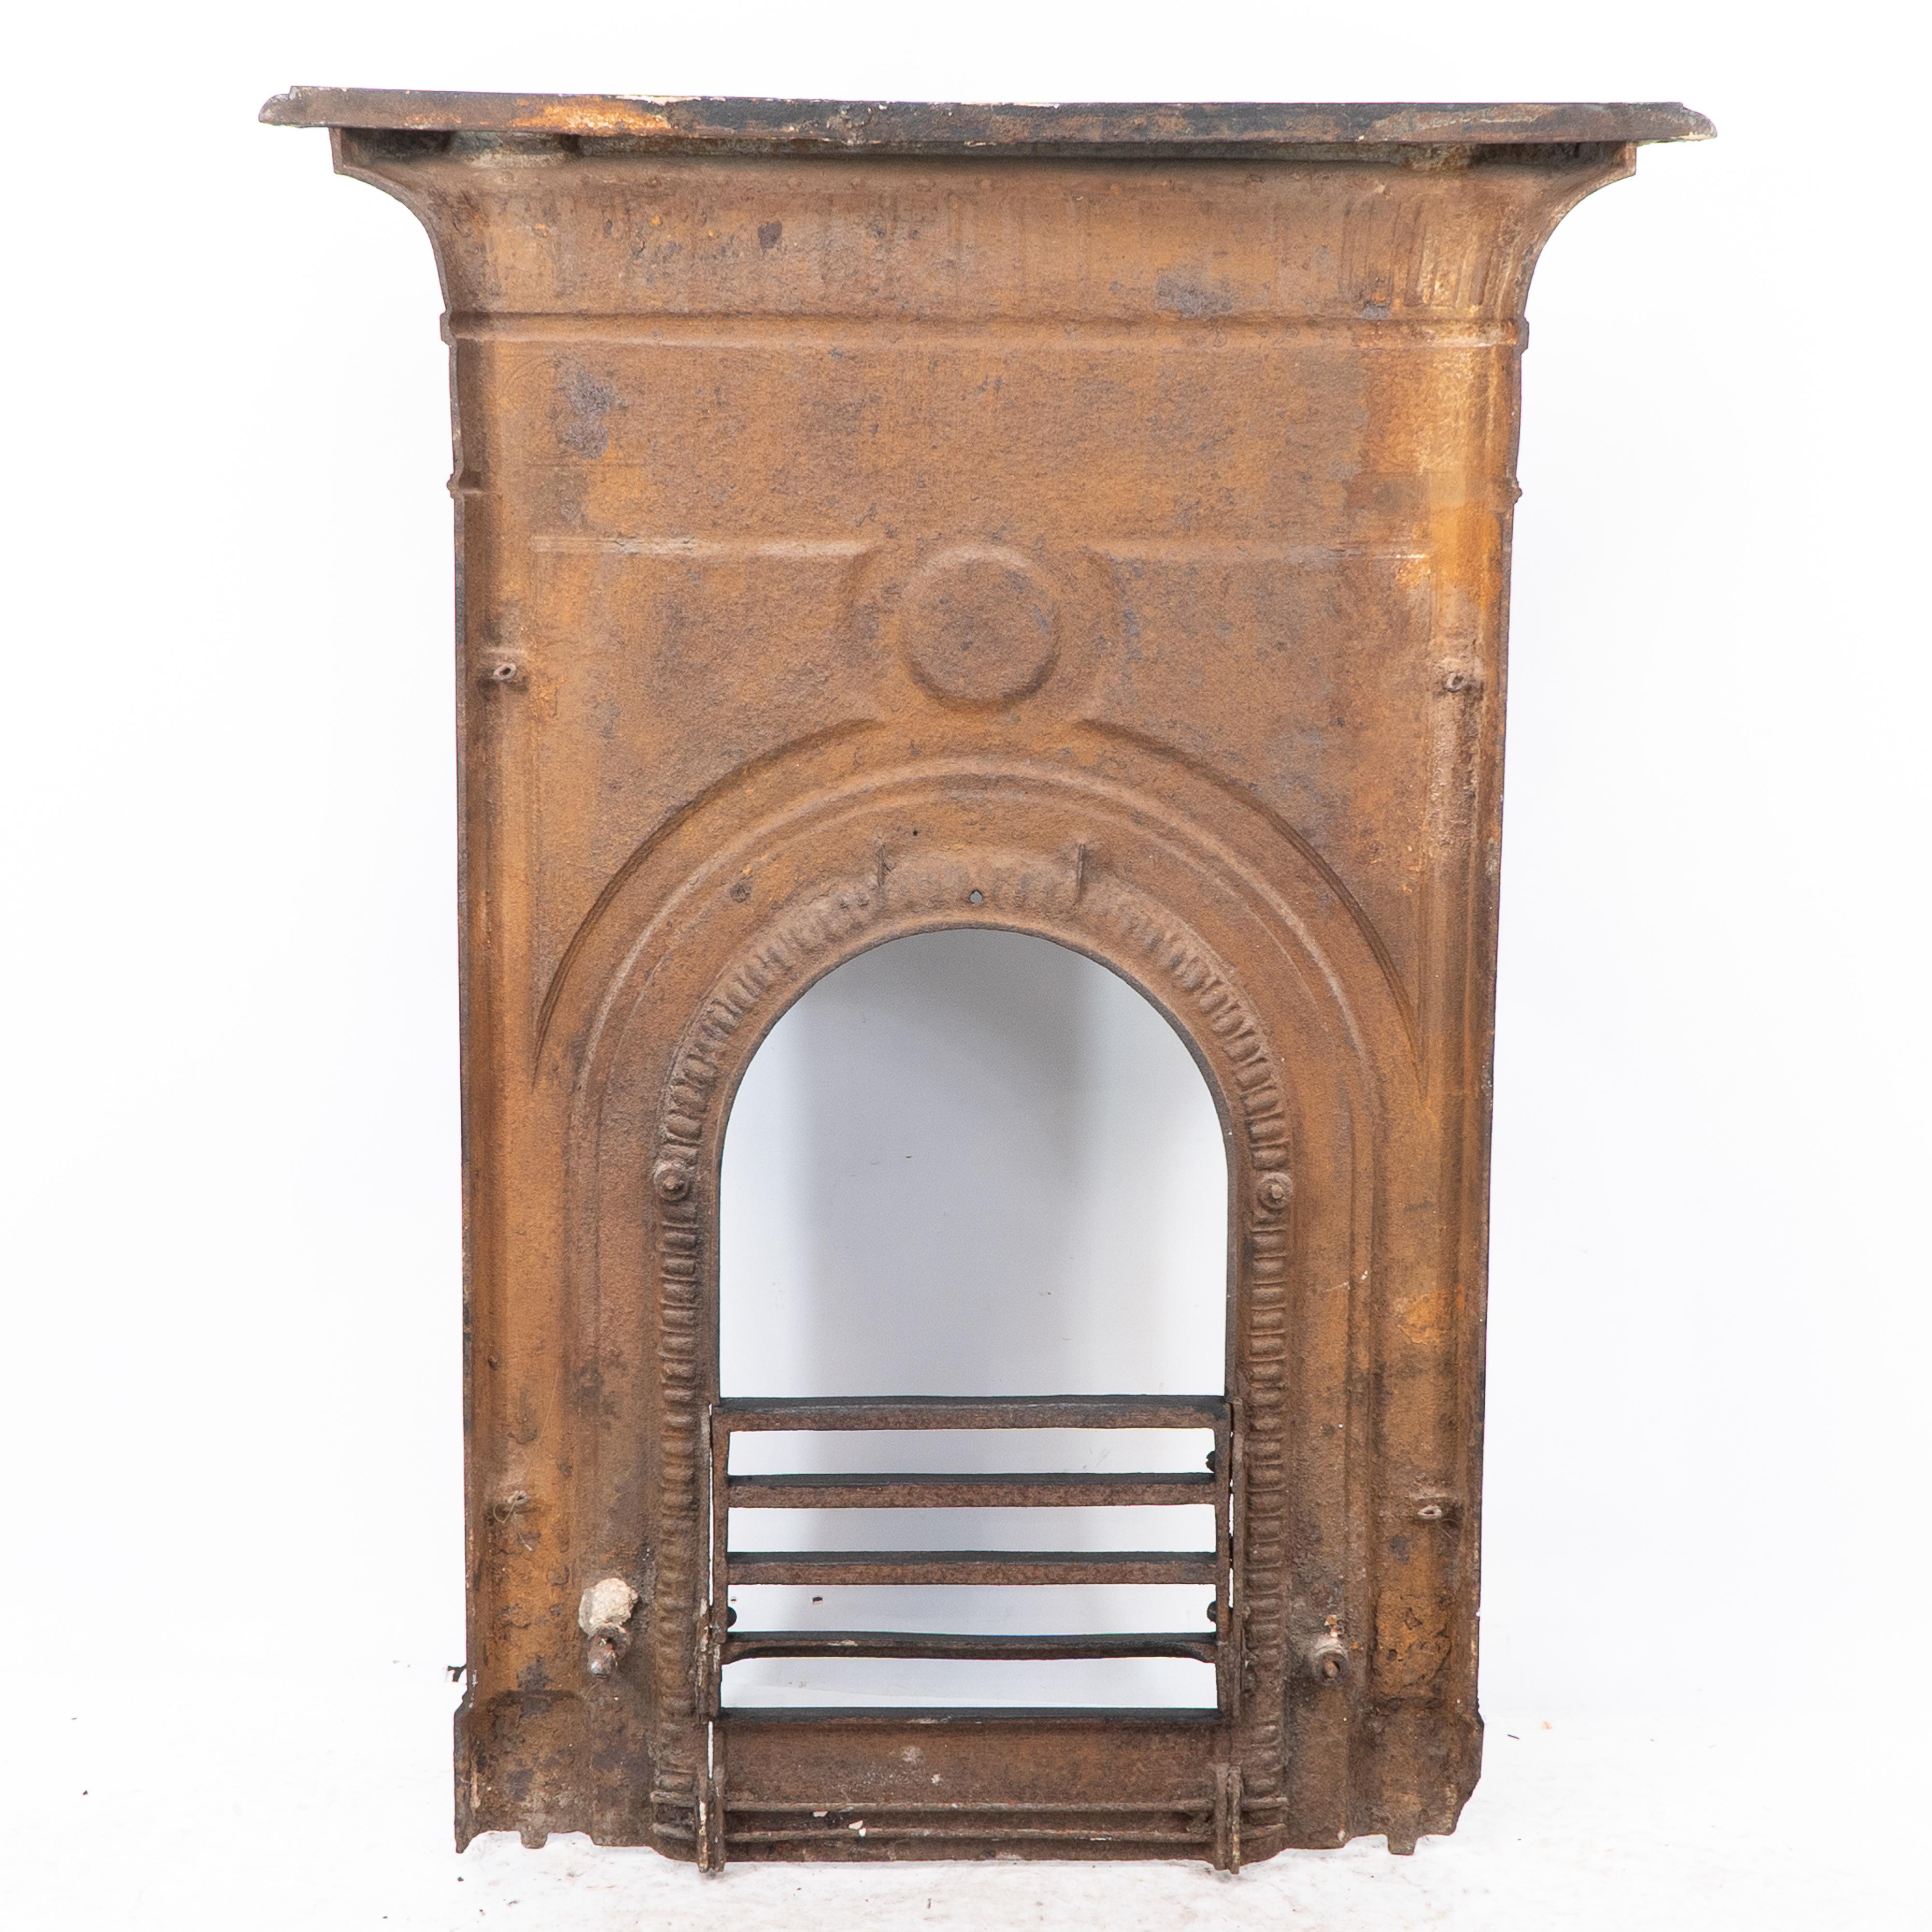 Thomas Jeckyll for Barnard Bishop & Barnard. A rare Aesthetic Movement fireplace For Sale 11